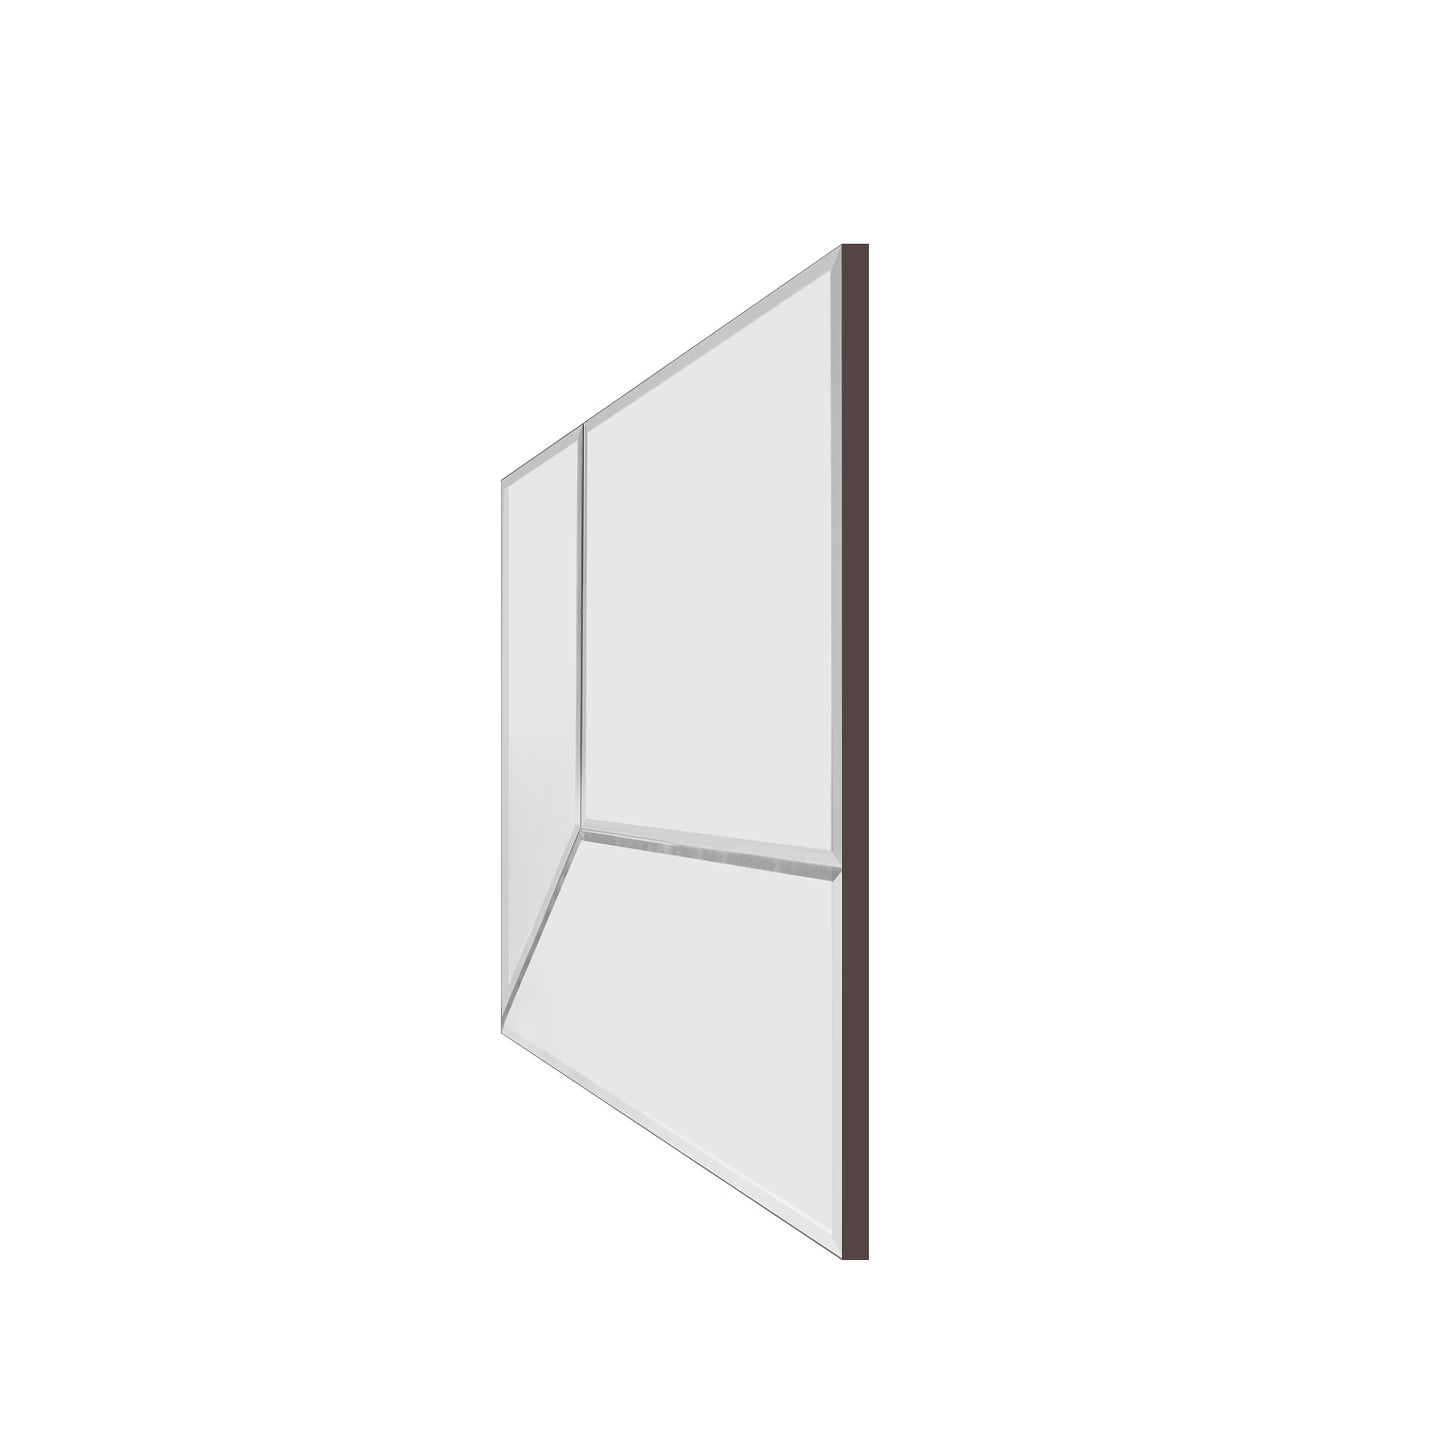 Reversible Square XL- Mirror - Reversible - Beveled Mirror - Unique Wall Decor